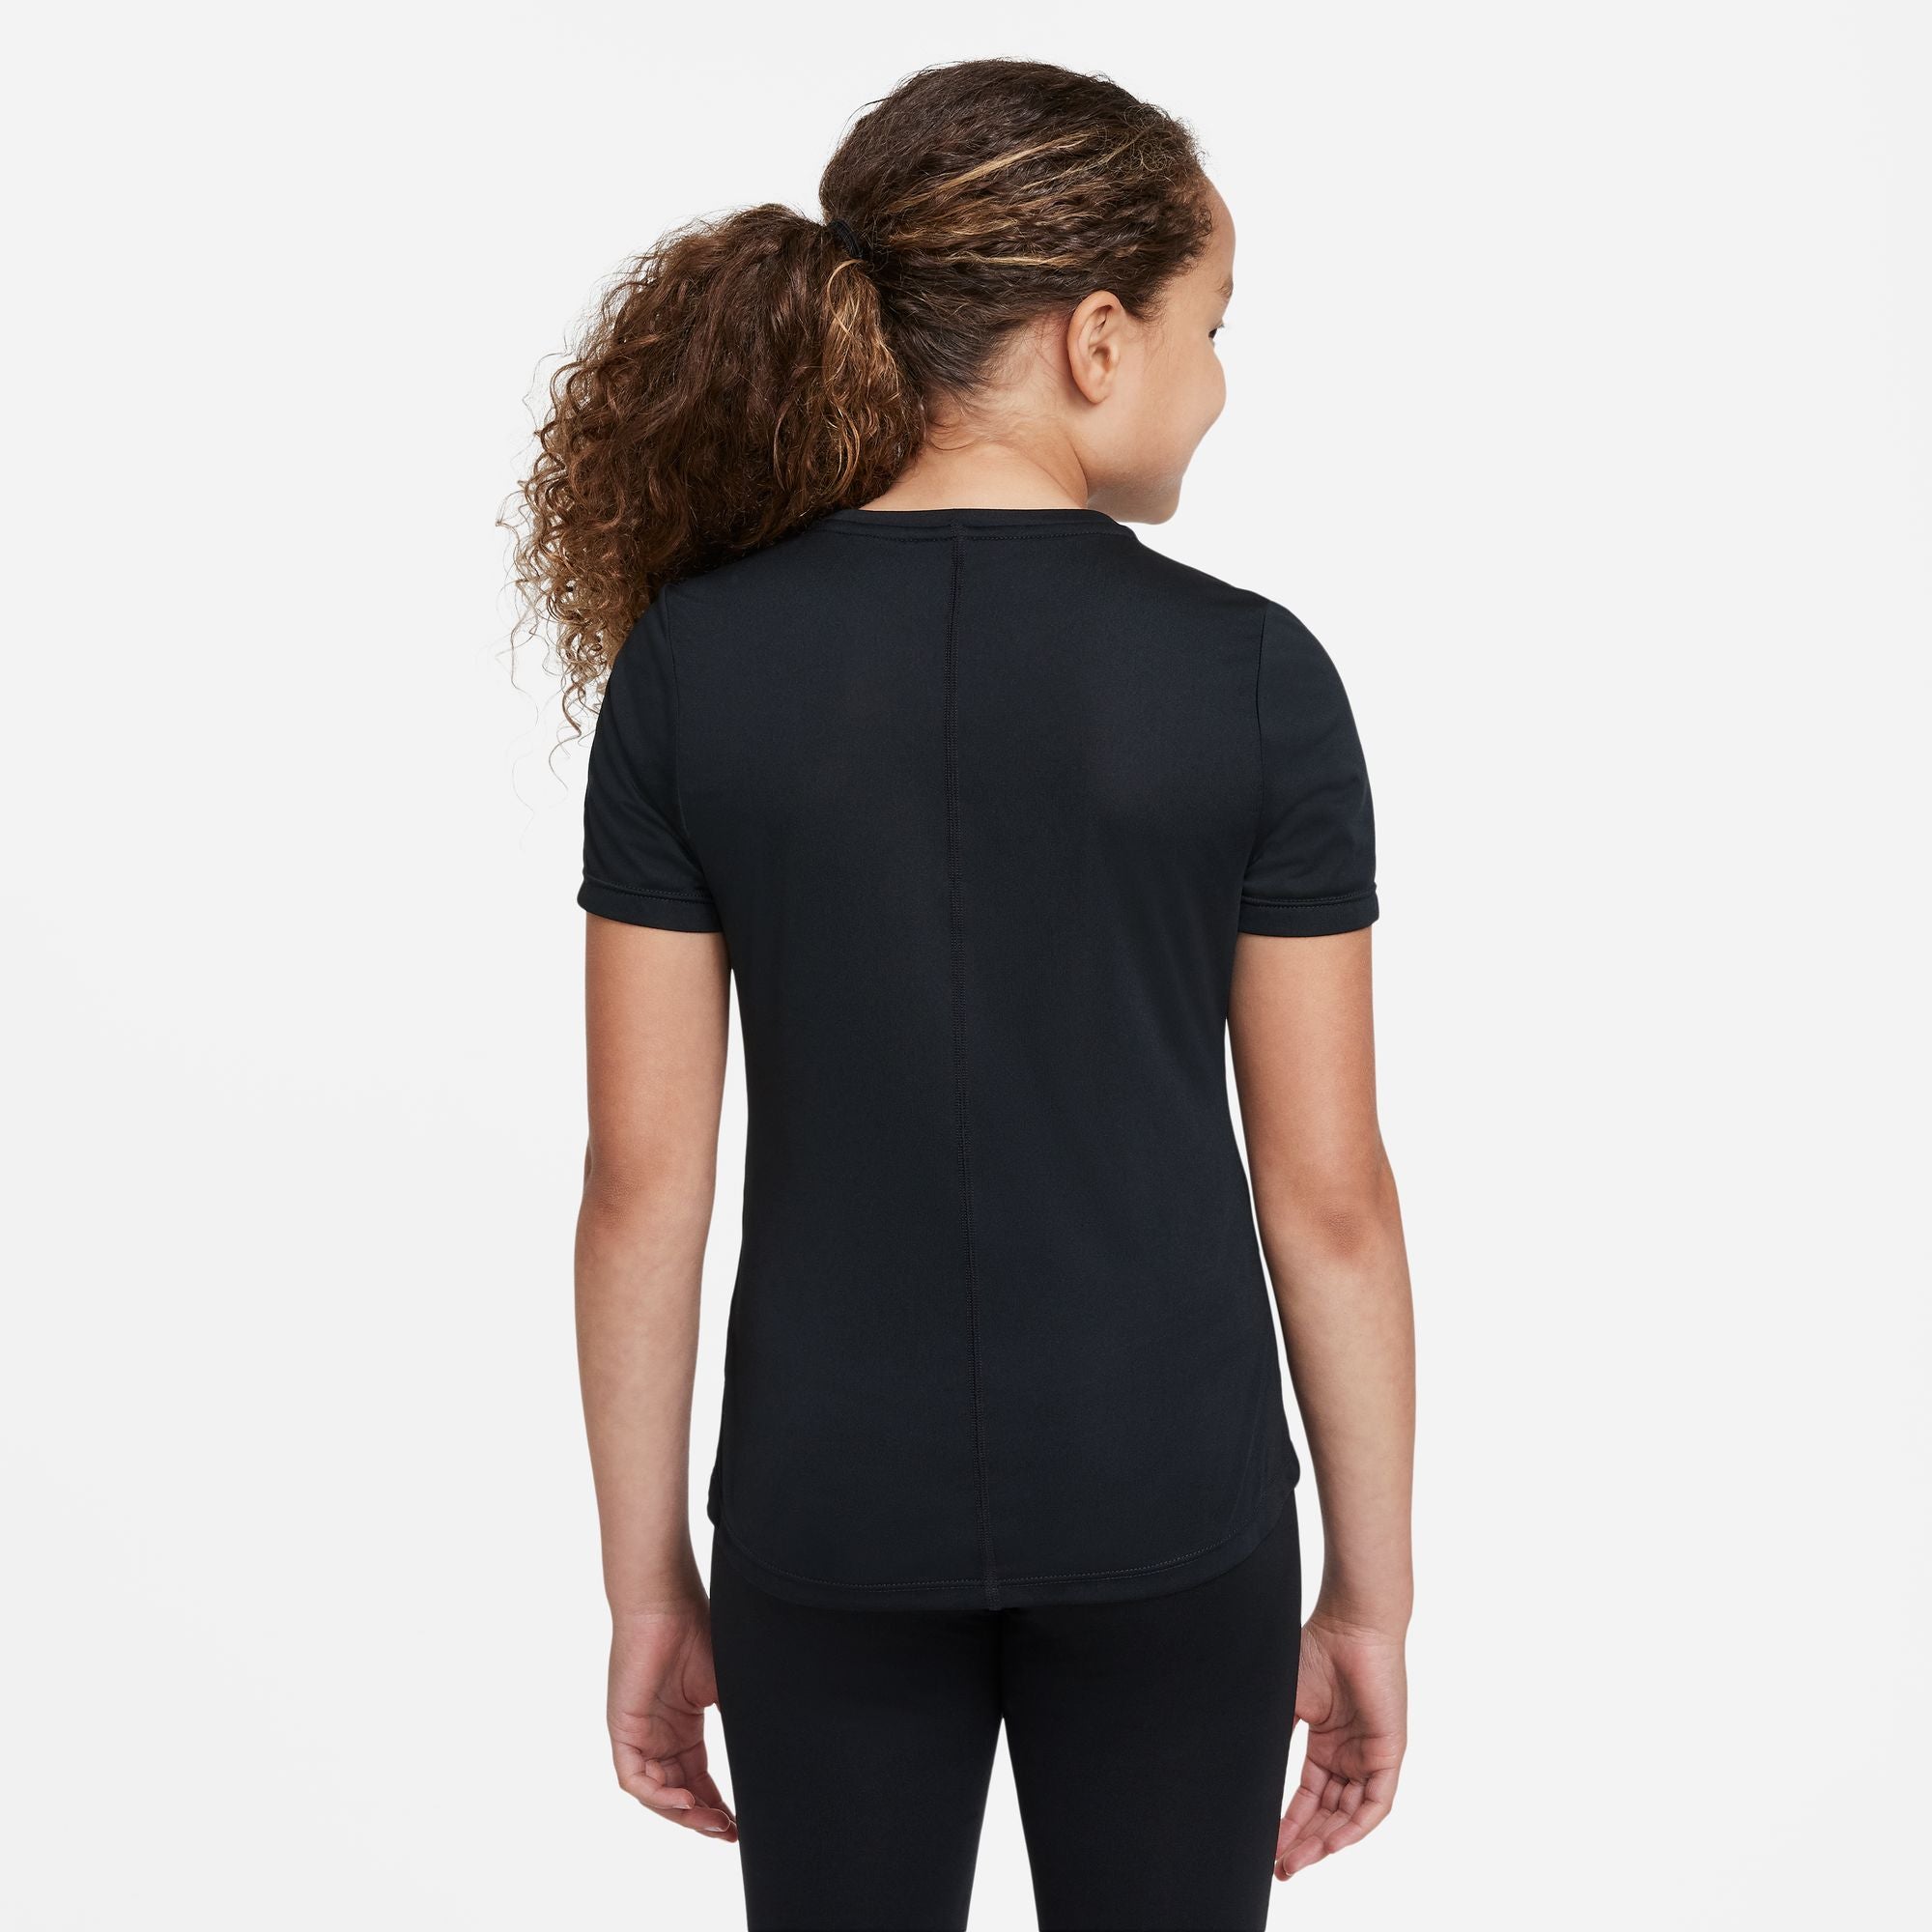 Nike Dri-FIT One Girls' Short Sleeve Top Black (2)